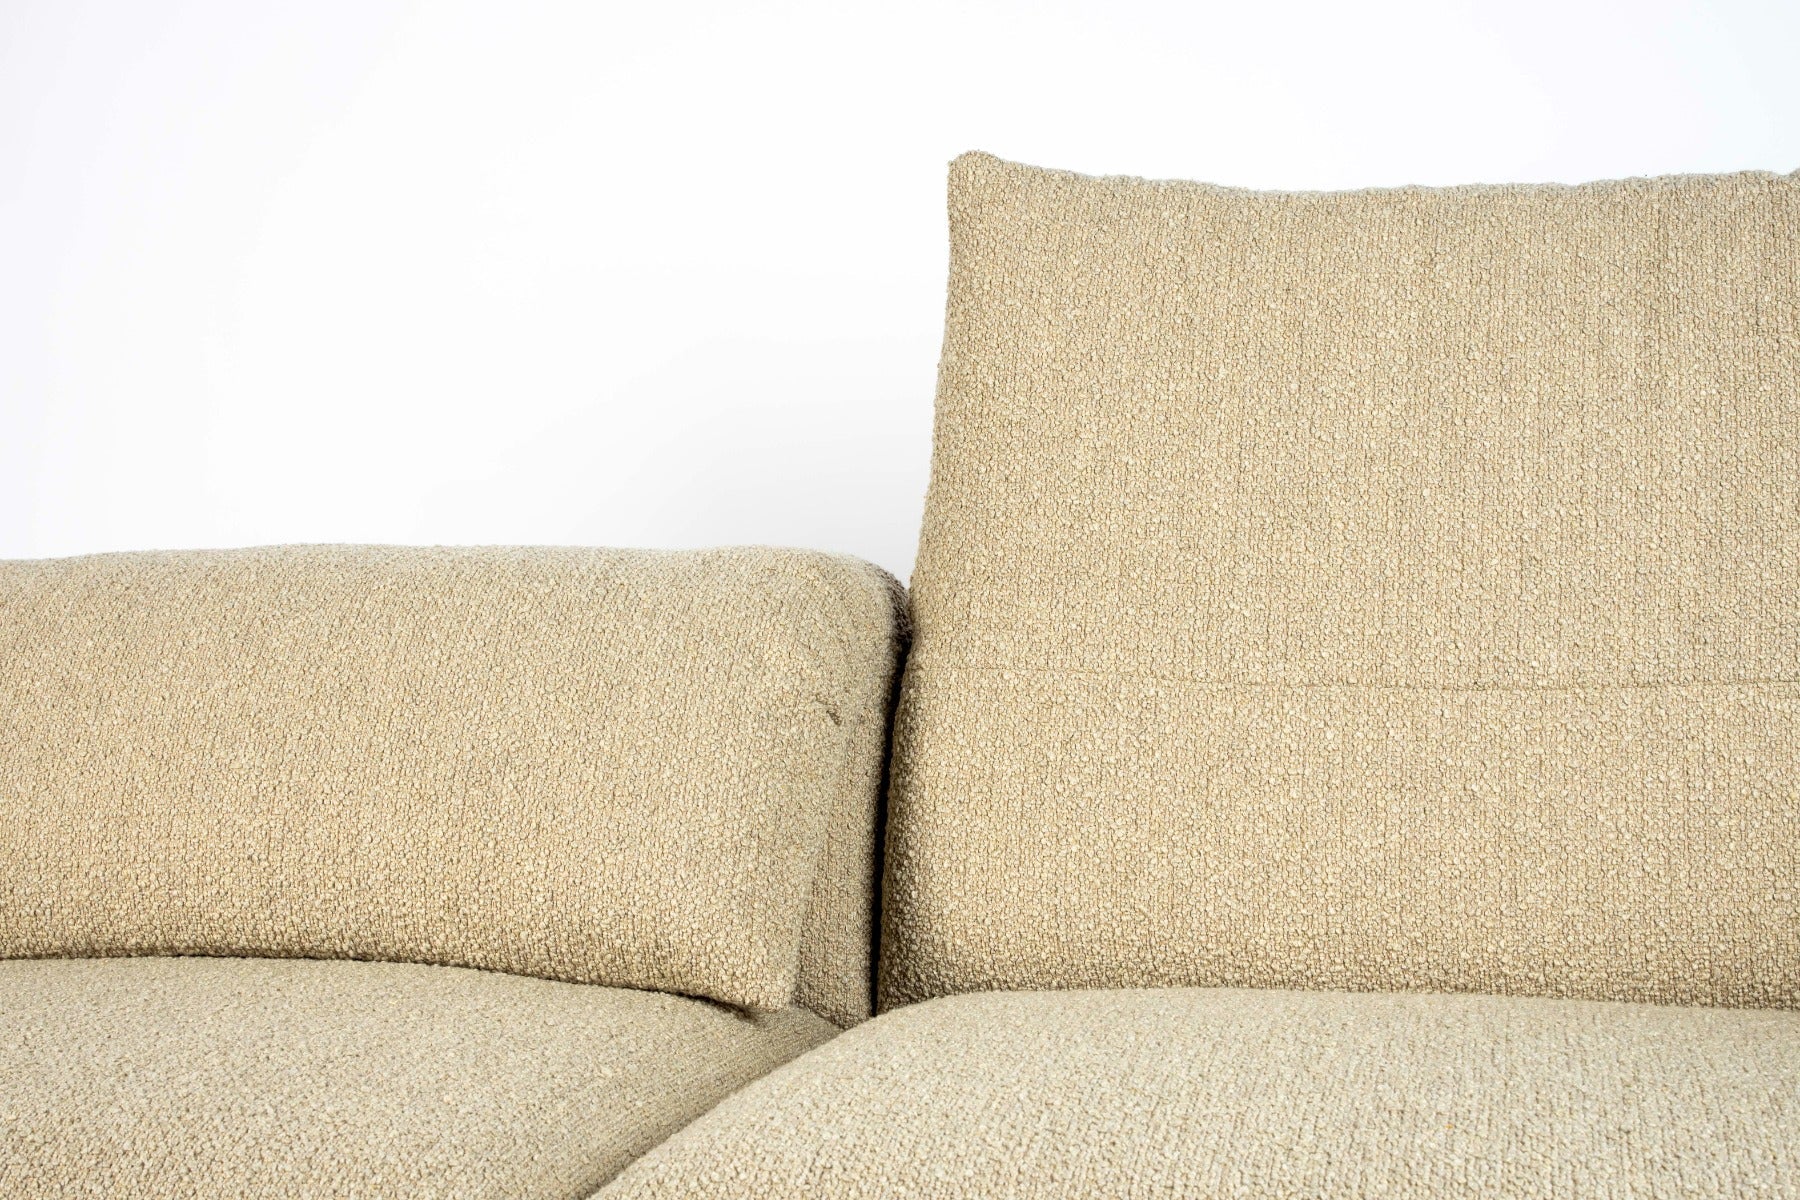 3-seater sofa WINGS caramel, Zuiver, Eye on Design